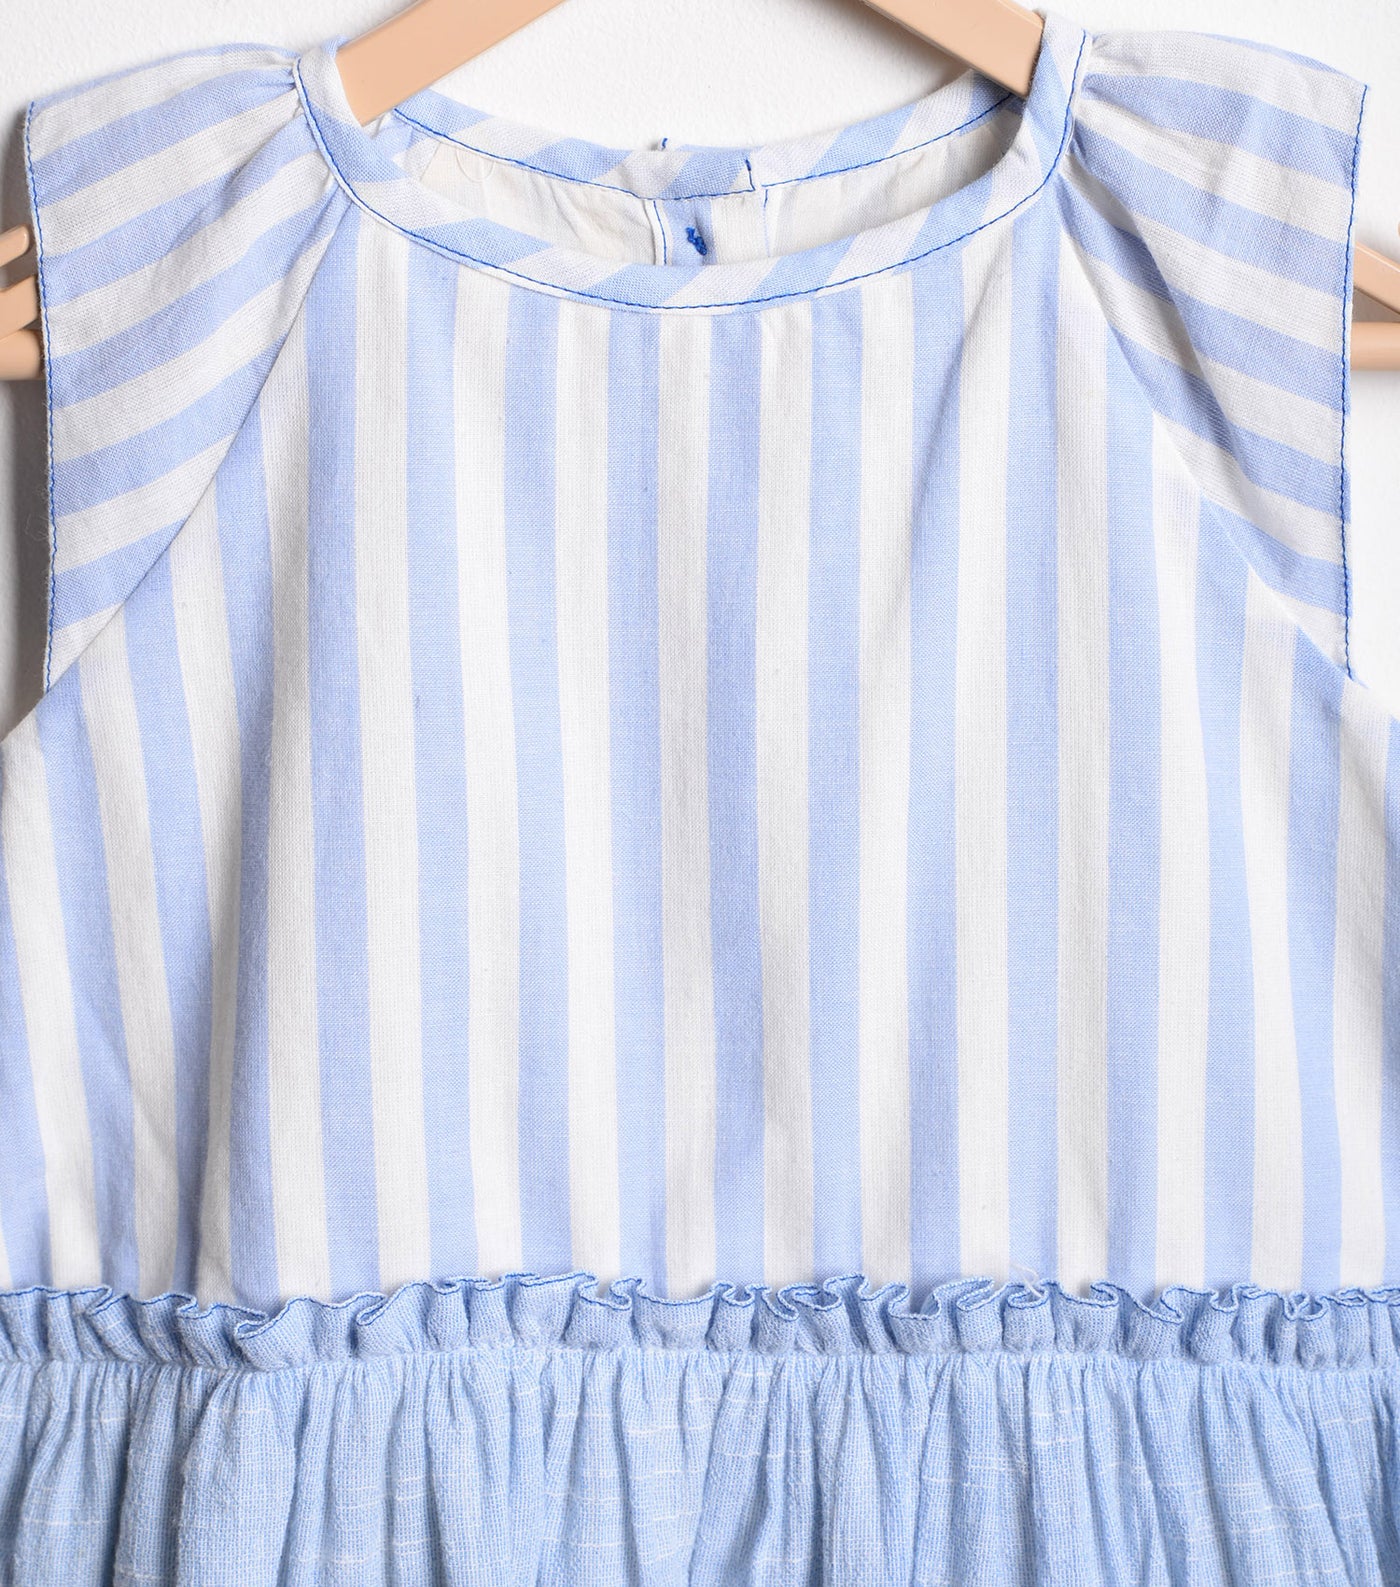 Blue Striped Cotton Dress